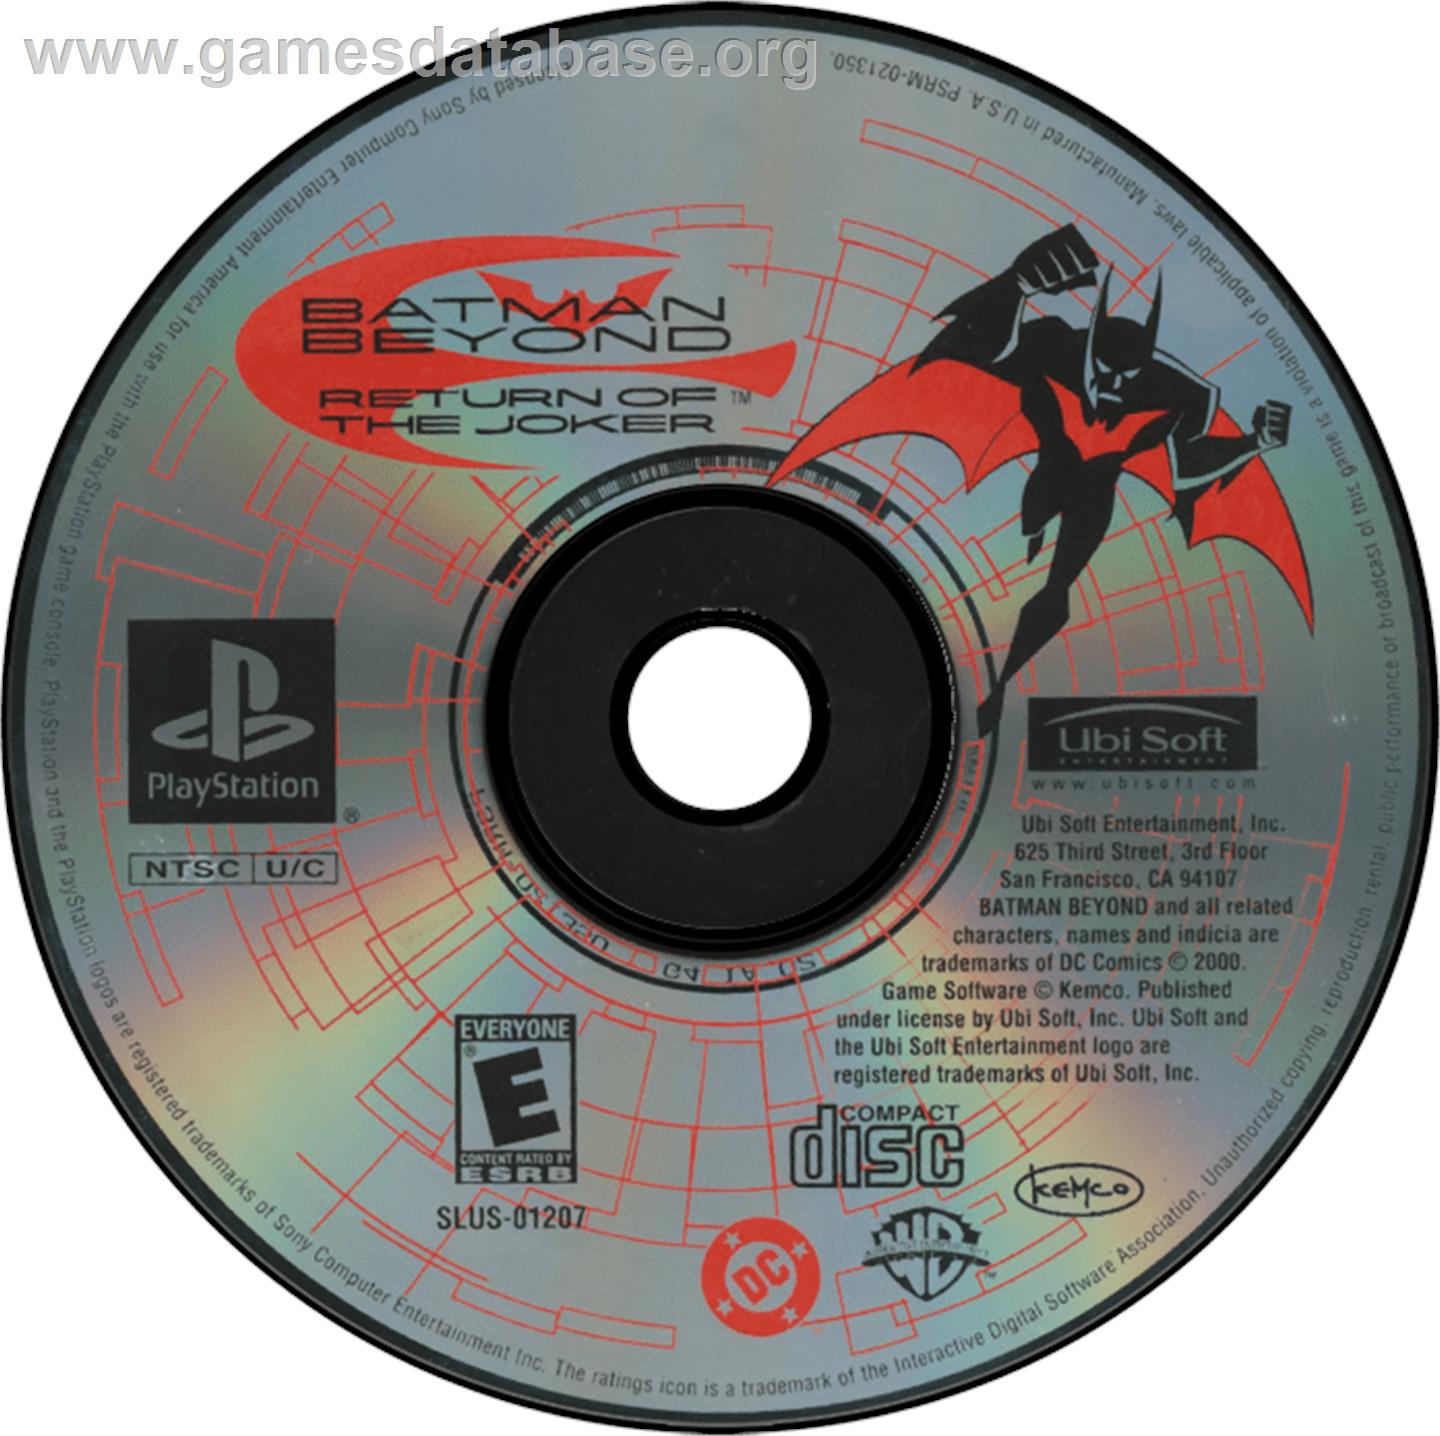 Batman Beyond: Return of the Joker - Sony Playstation - Artwork - Disc